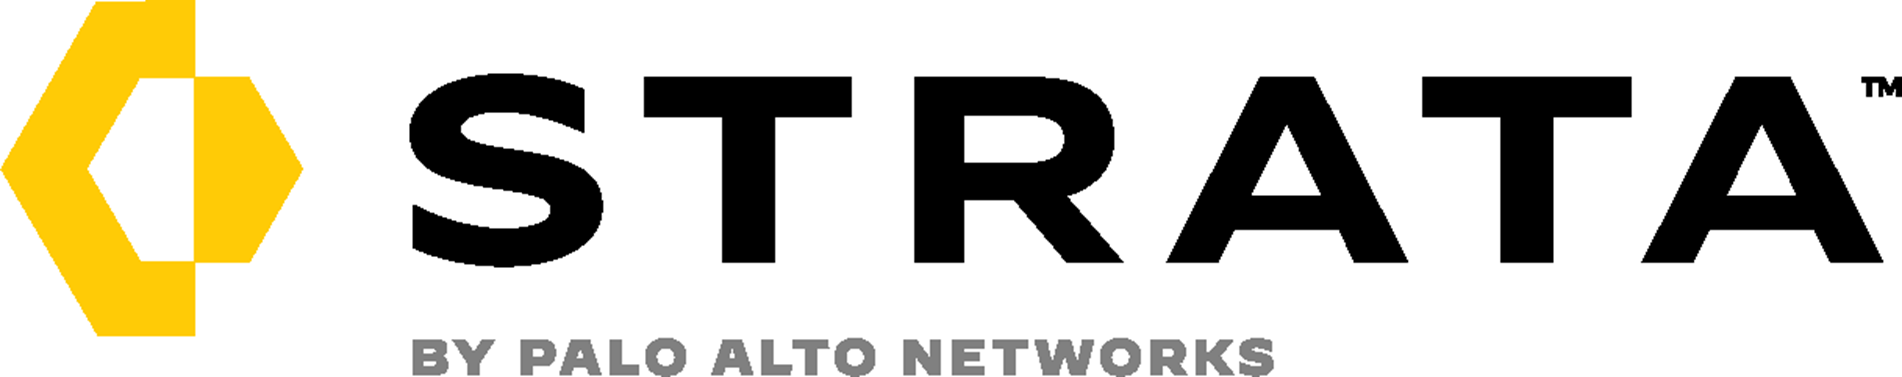 STRATA logo